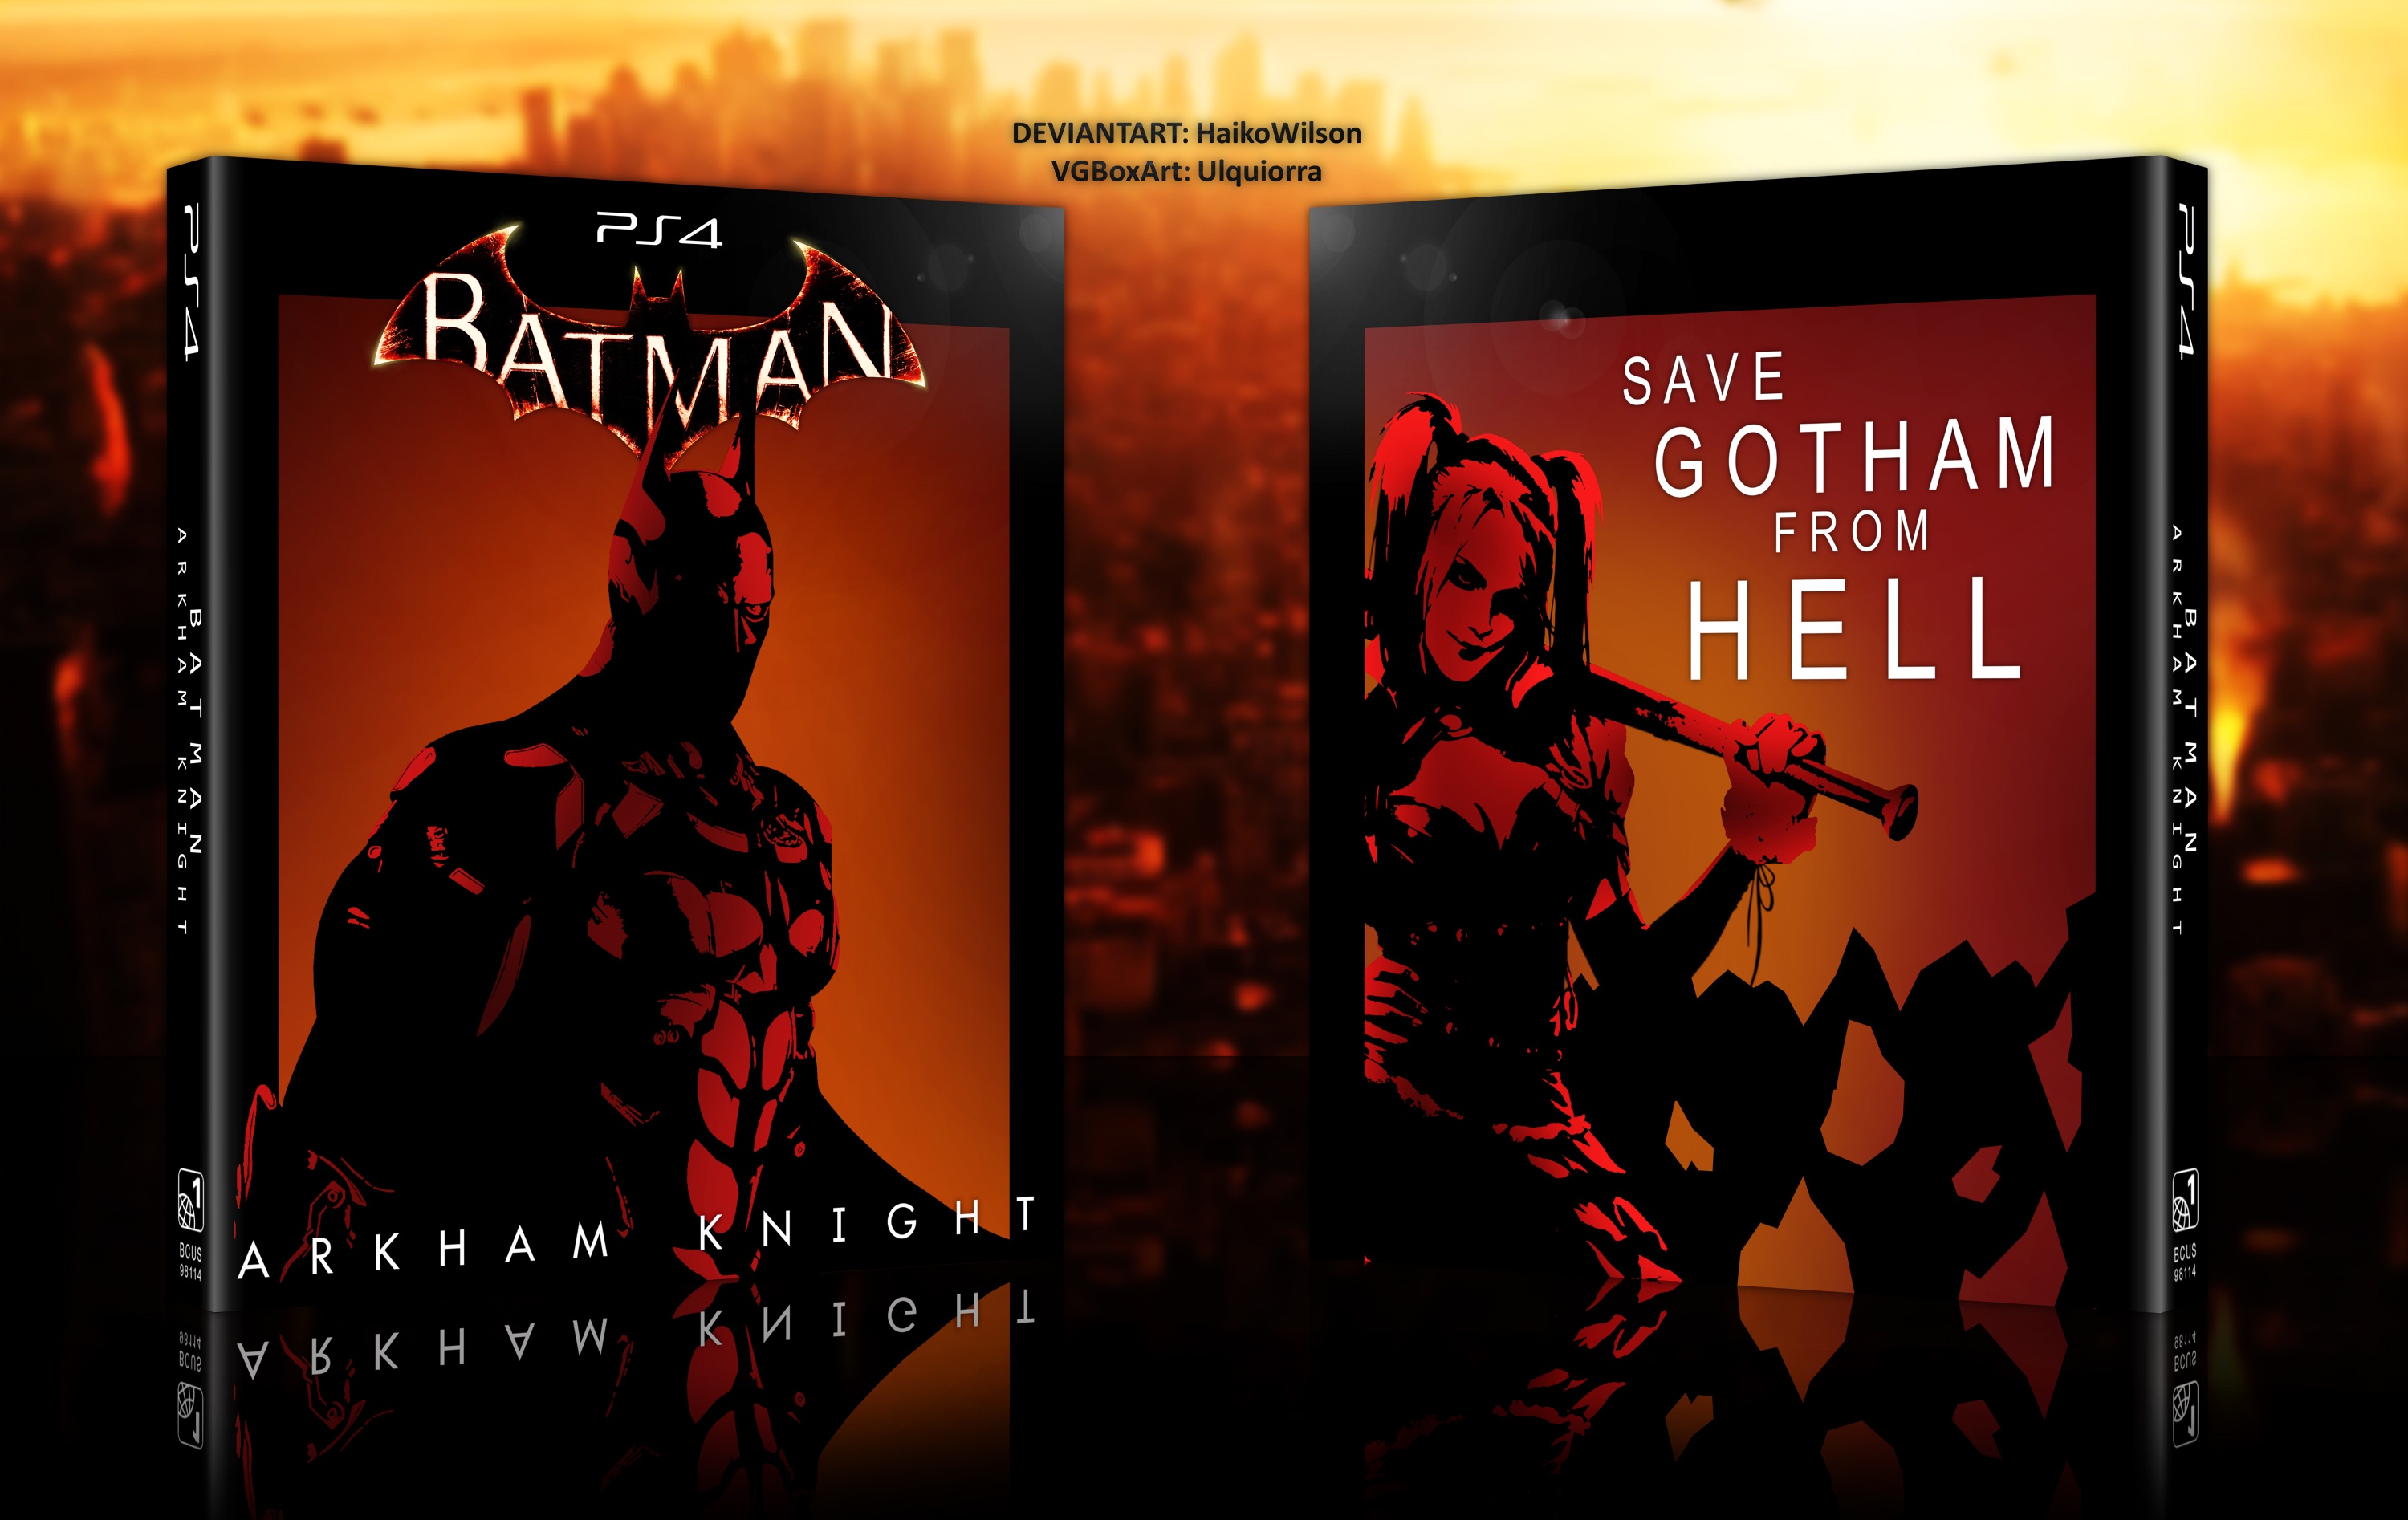 Batman Arkham Knight box cover